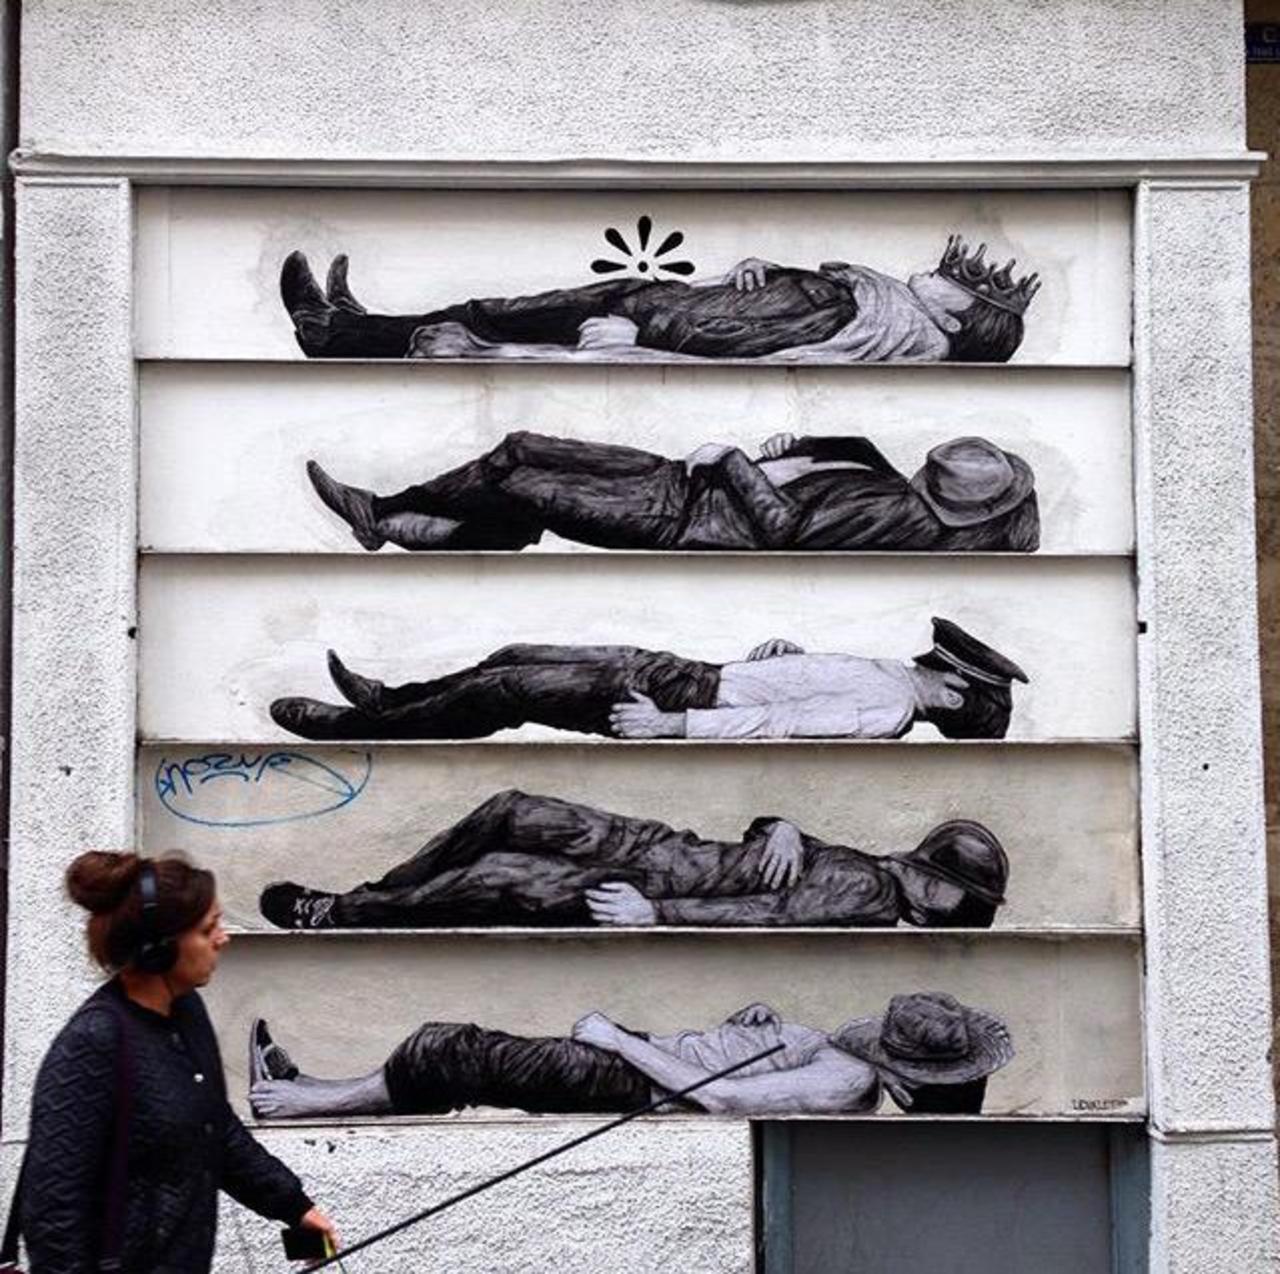 New Street Art by Levalet 
L'ordre des choses - Paris XIX

#art #mural #graffiti #streetart http://t.co/wVc3kMaXnz